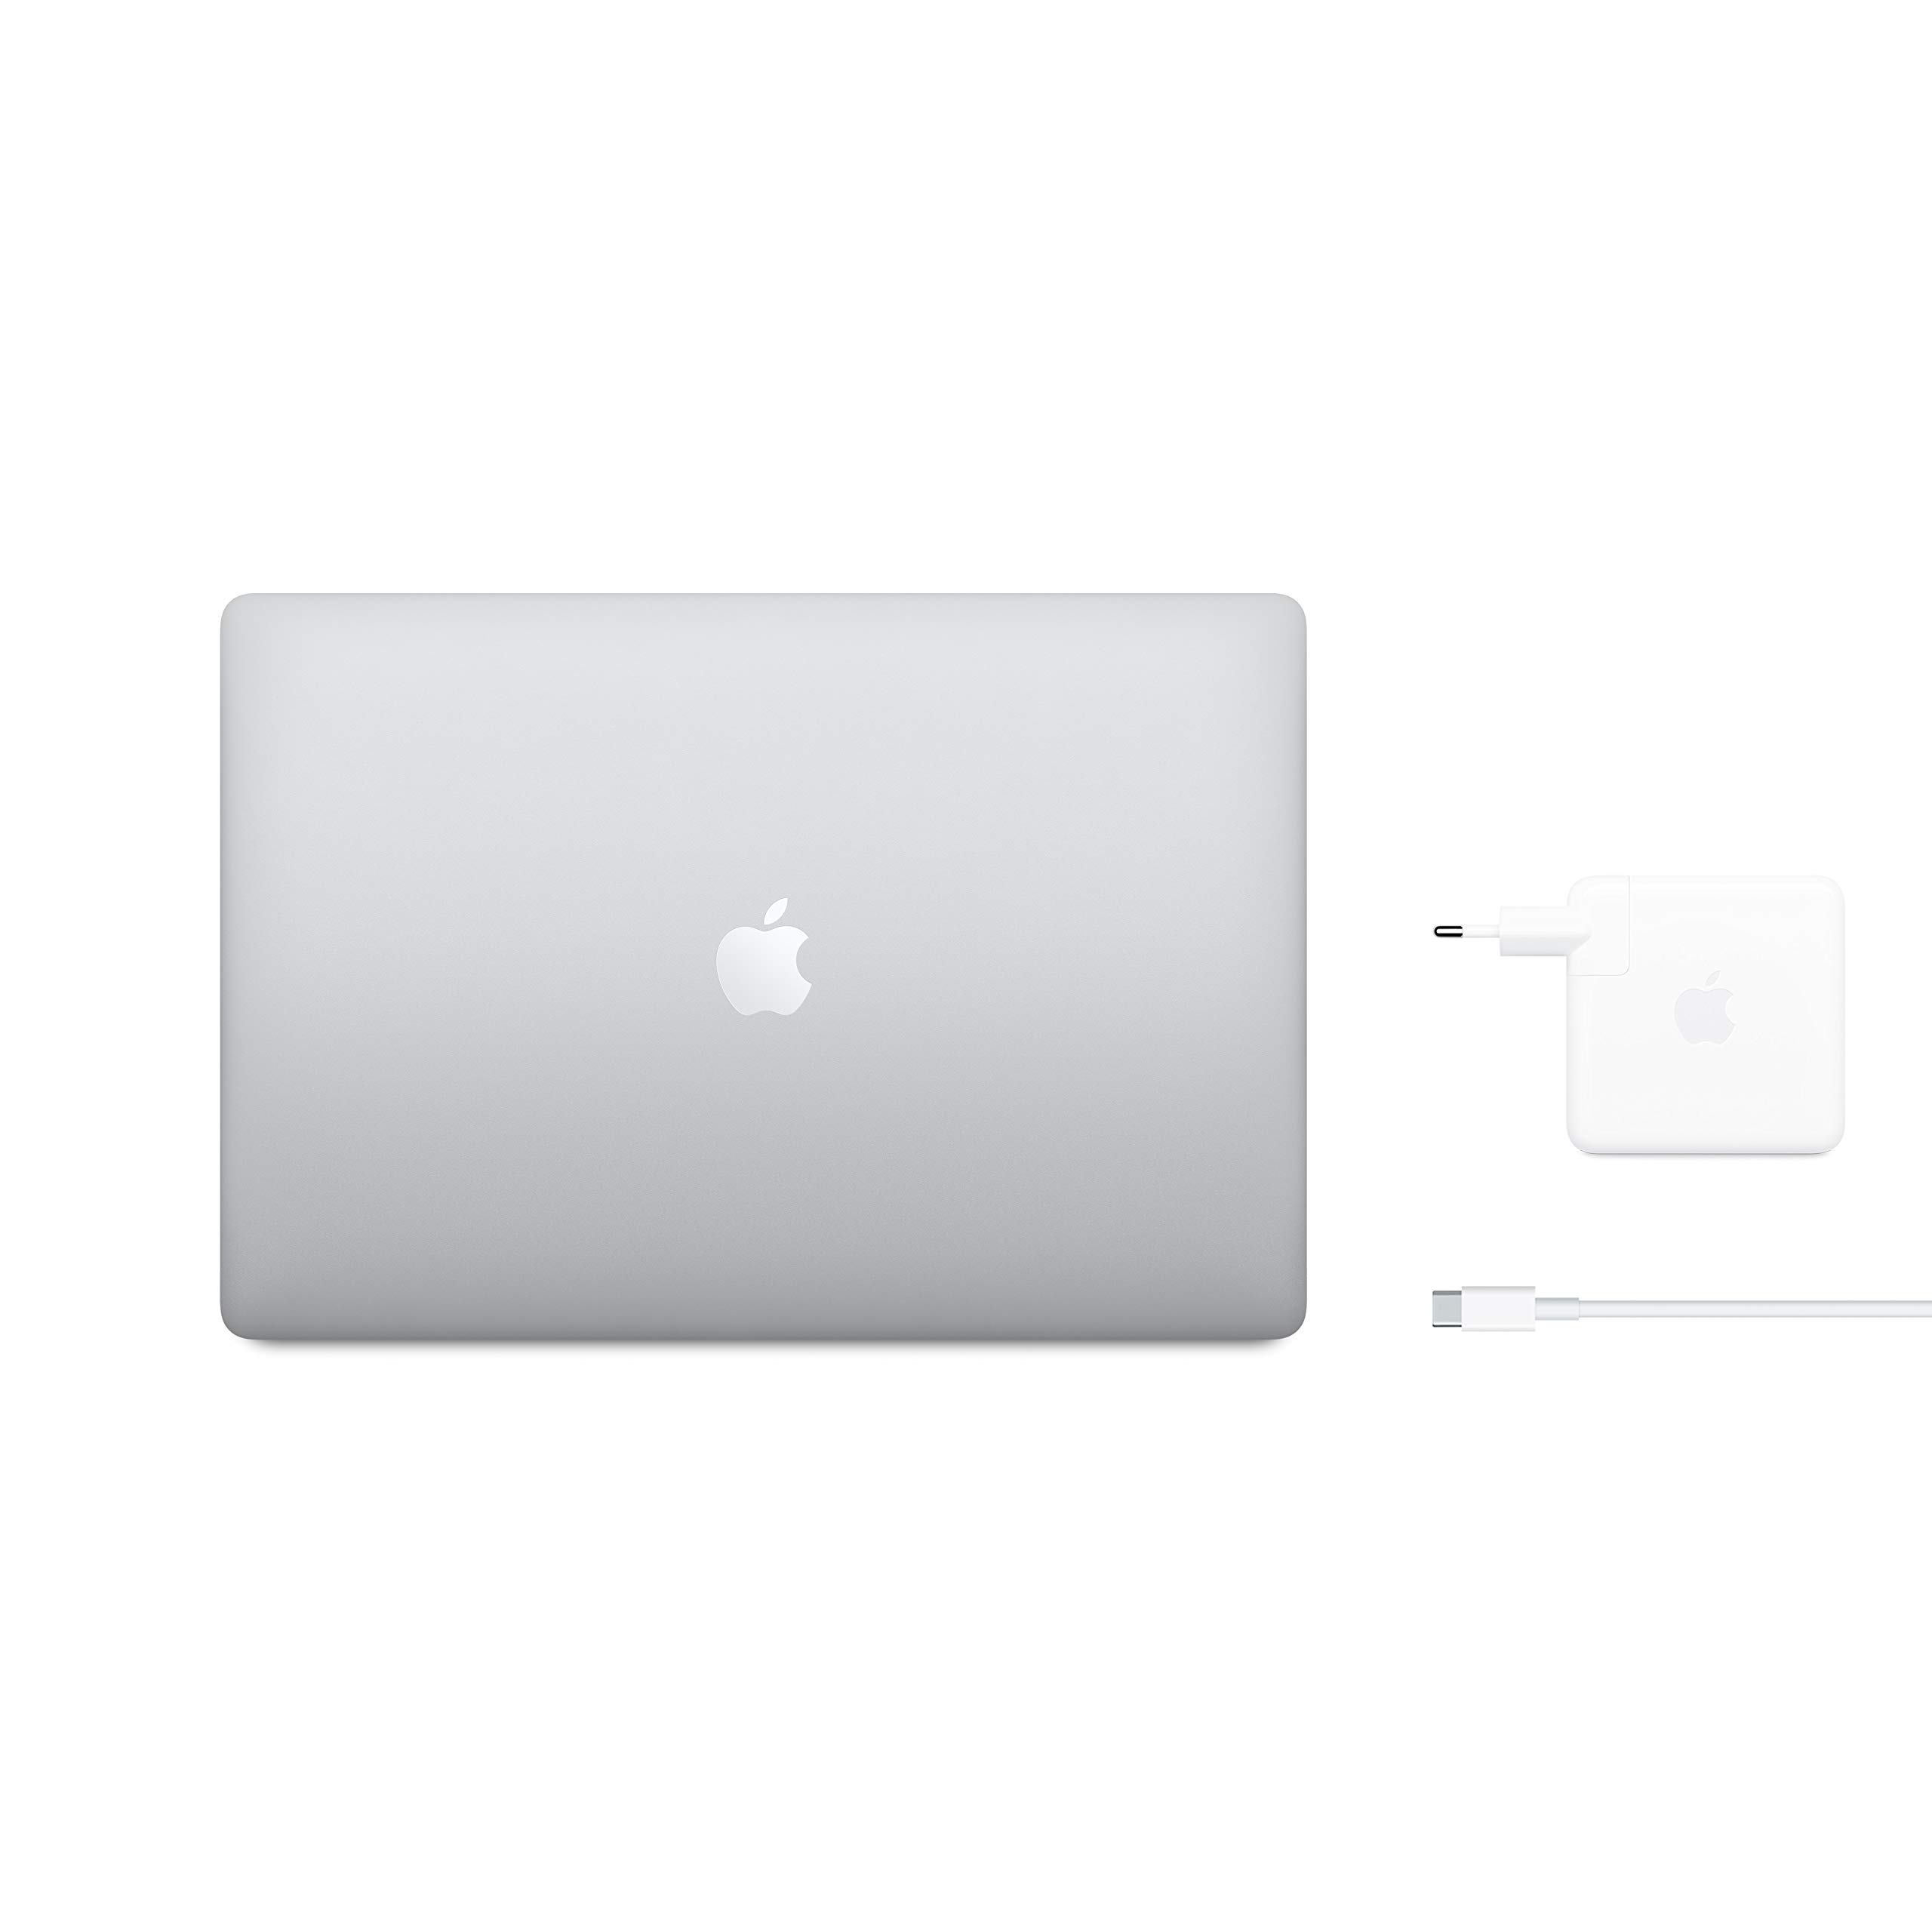 Apple 2019 MacBook Pro (16-inch, 16GB RAM, 512GB Storage, 2.6GHz Intel Core i7) - Silver